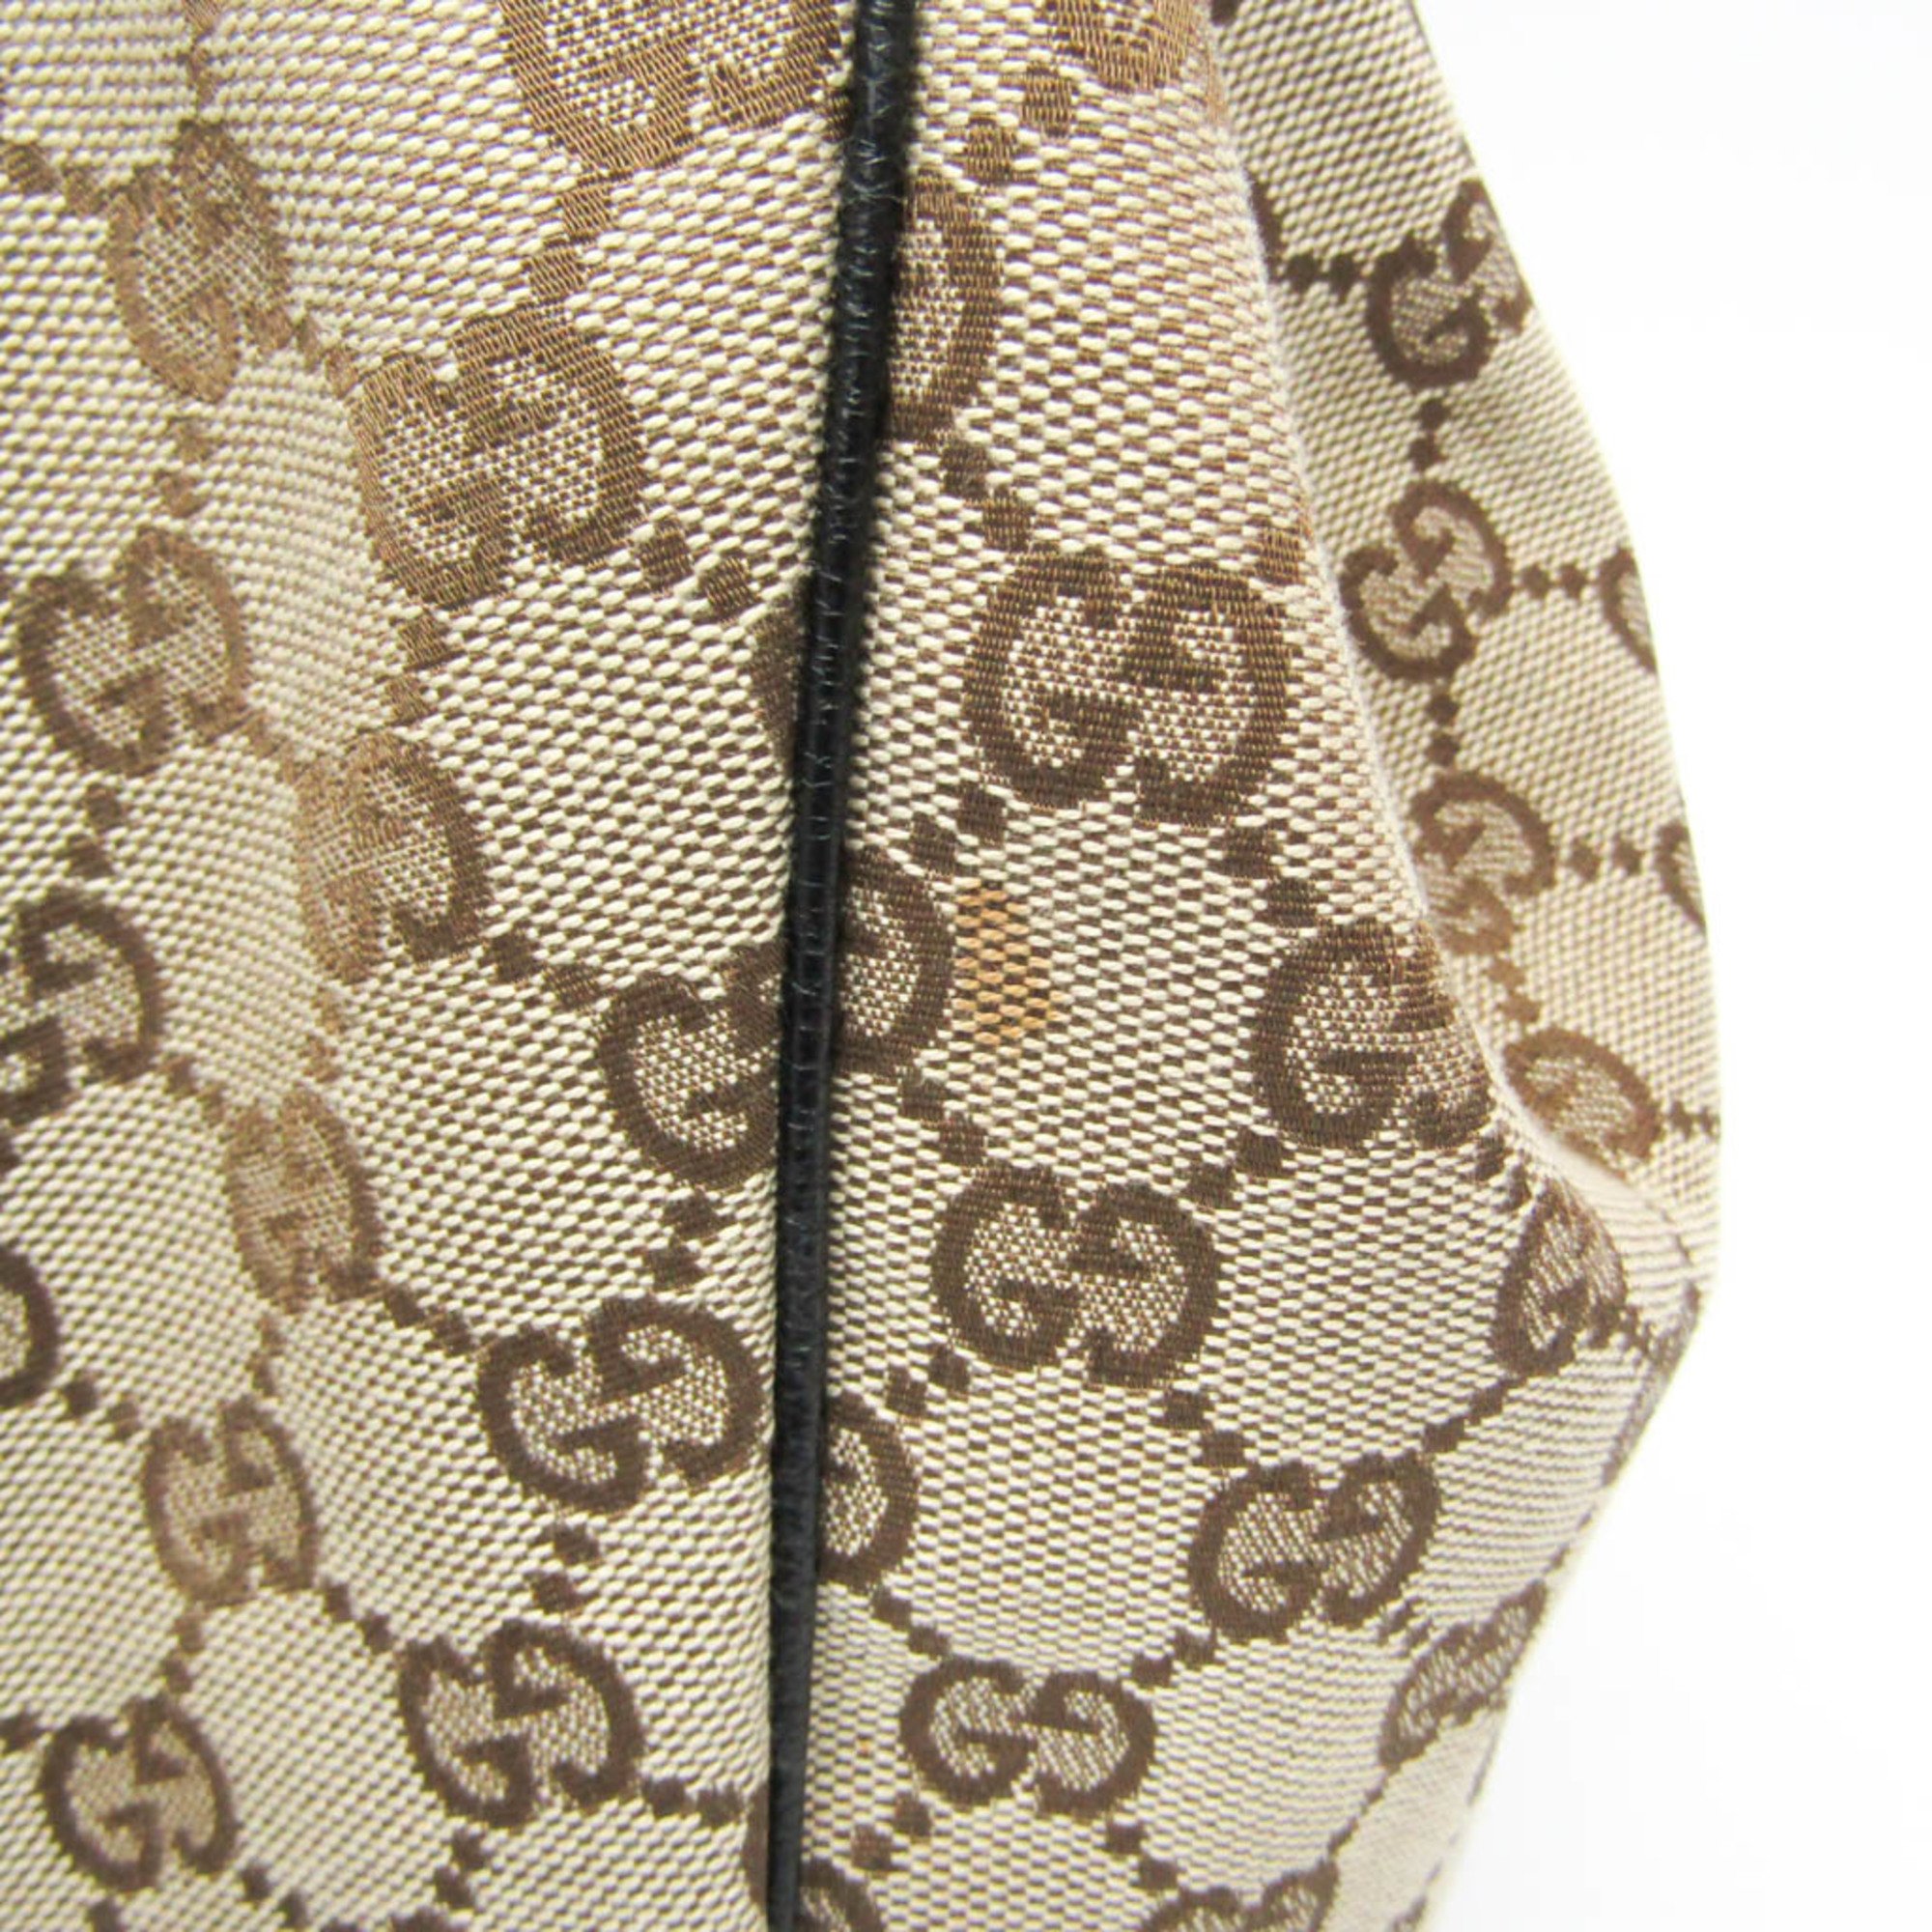 Gucci Sukey 211943 Women's Leather,GG Canvas Handbag Beige,Black,Brown